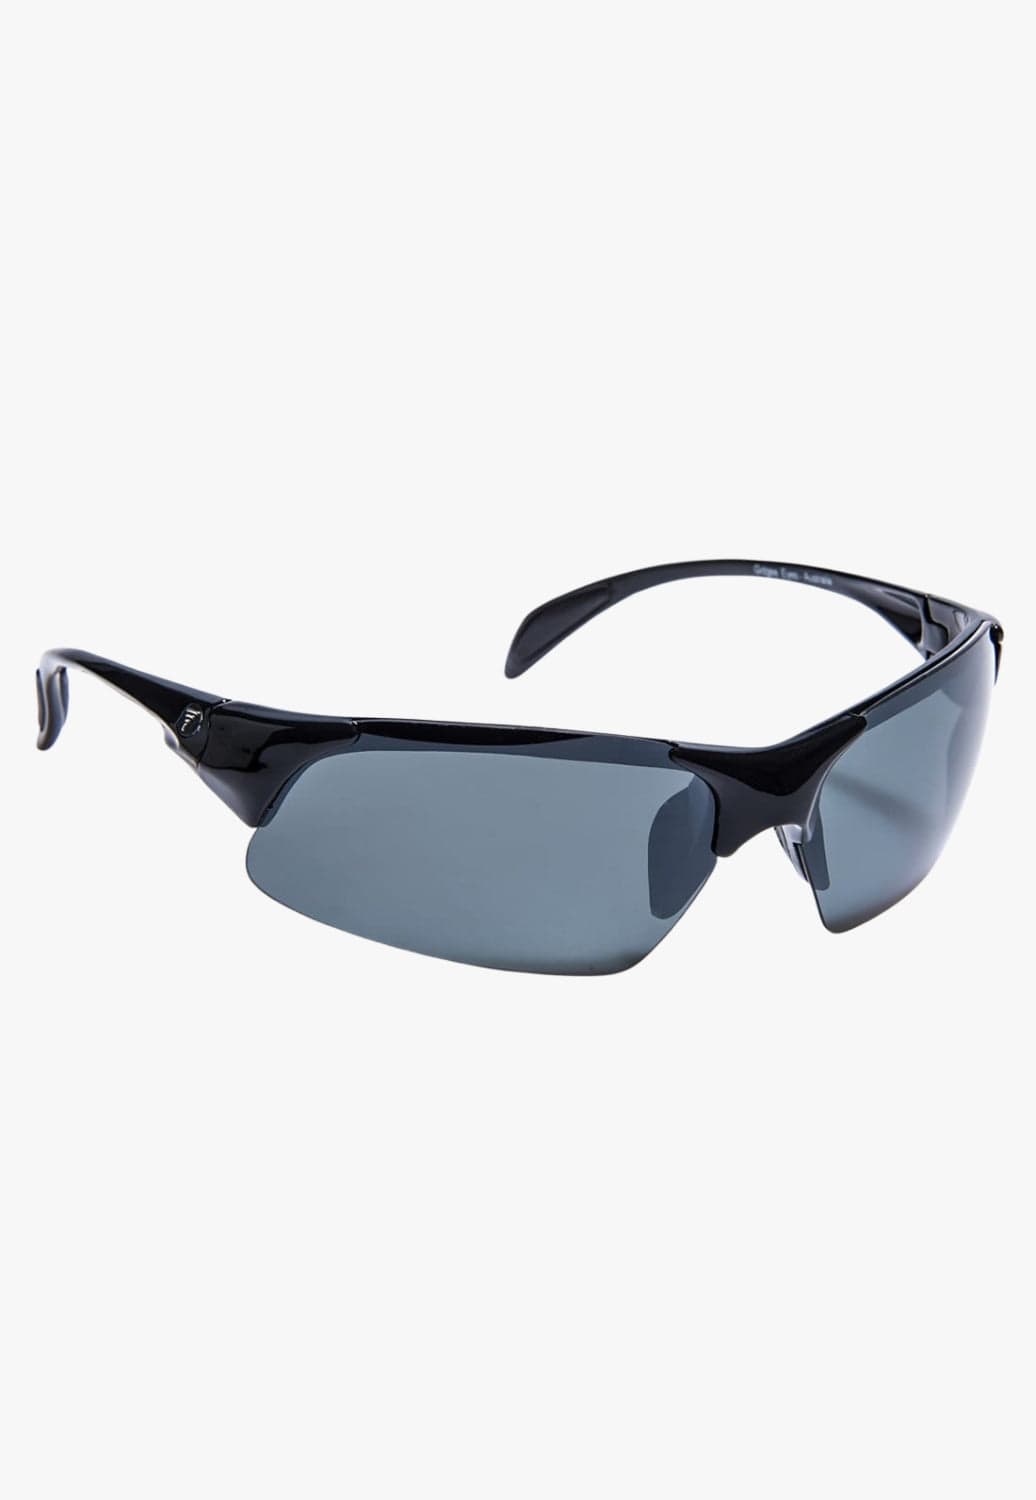 Gidgee Eyes ACCESSORIES-Sunglasses OSFA / Black Gidgee Eyes Cleancut Sunglasses